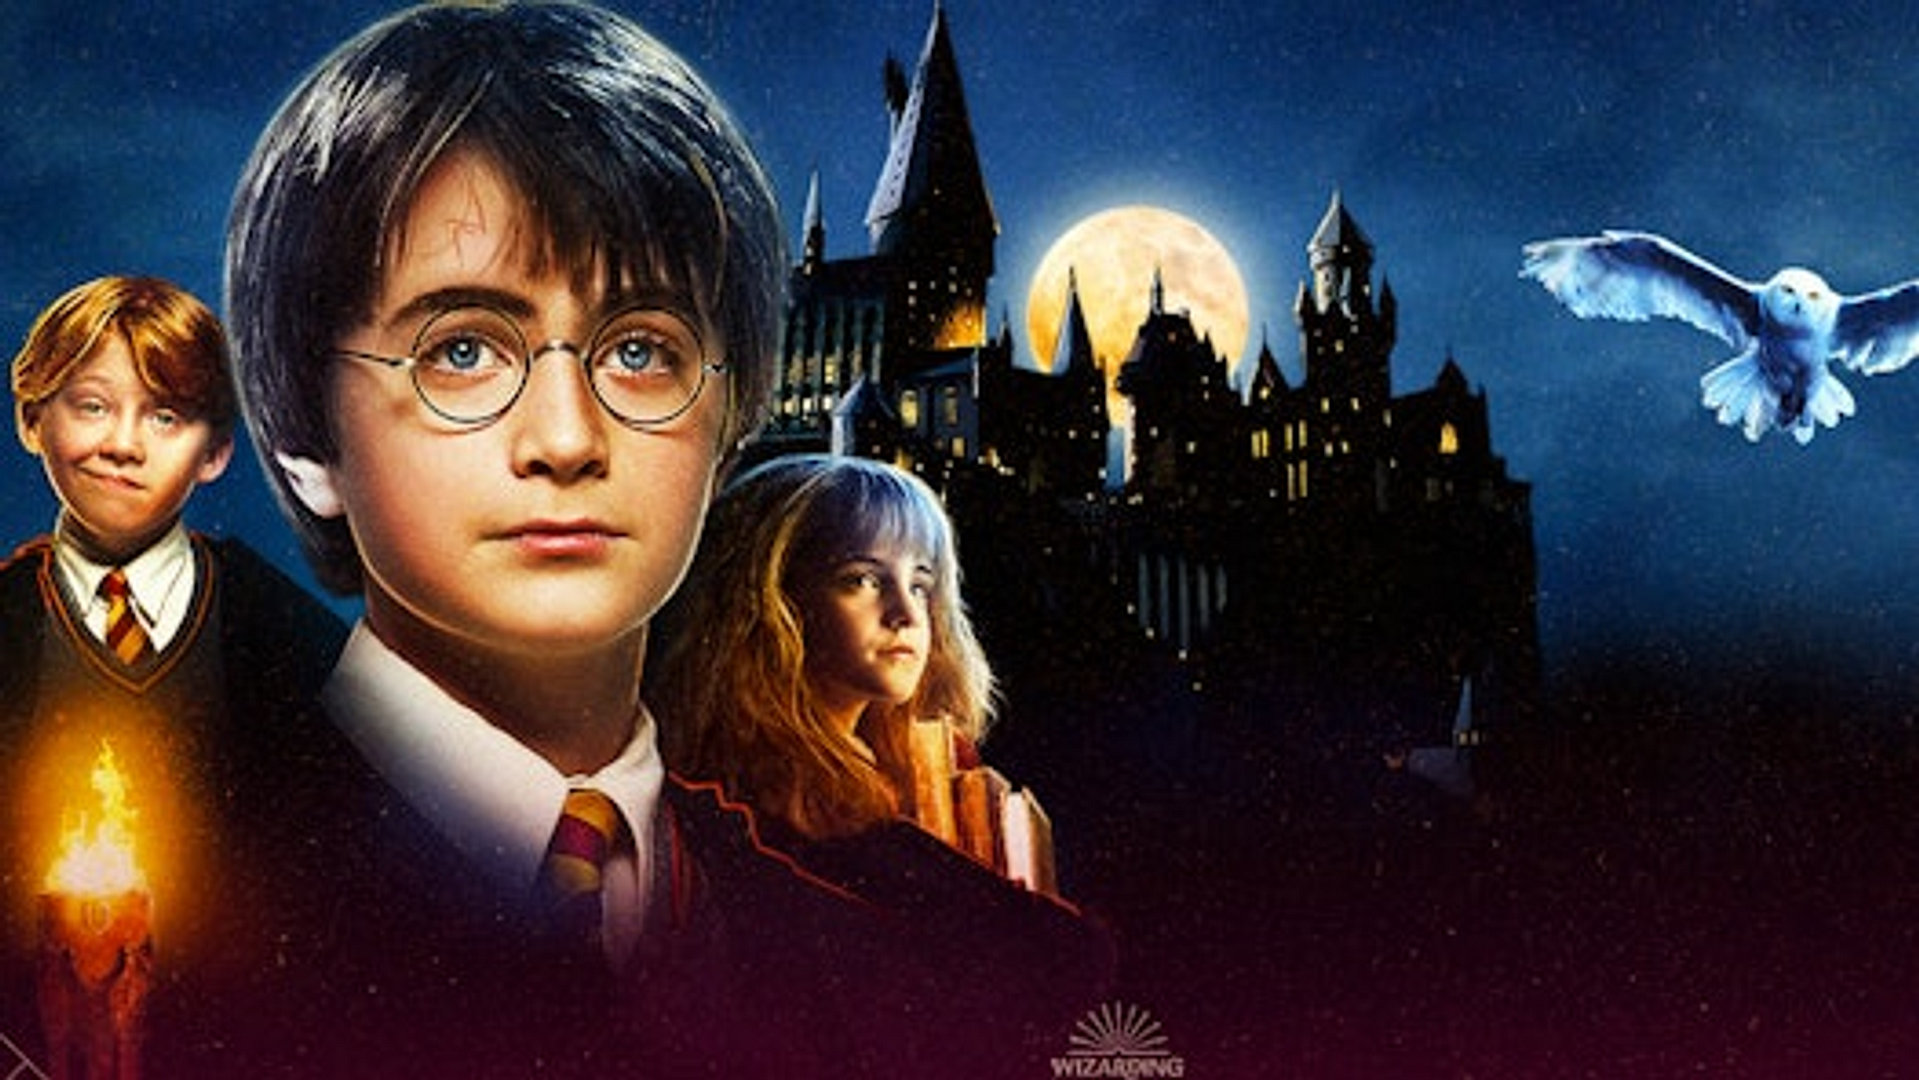 Harry Potter og de vises stein: Magical Movie Mode